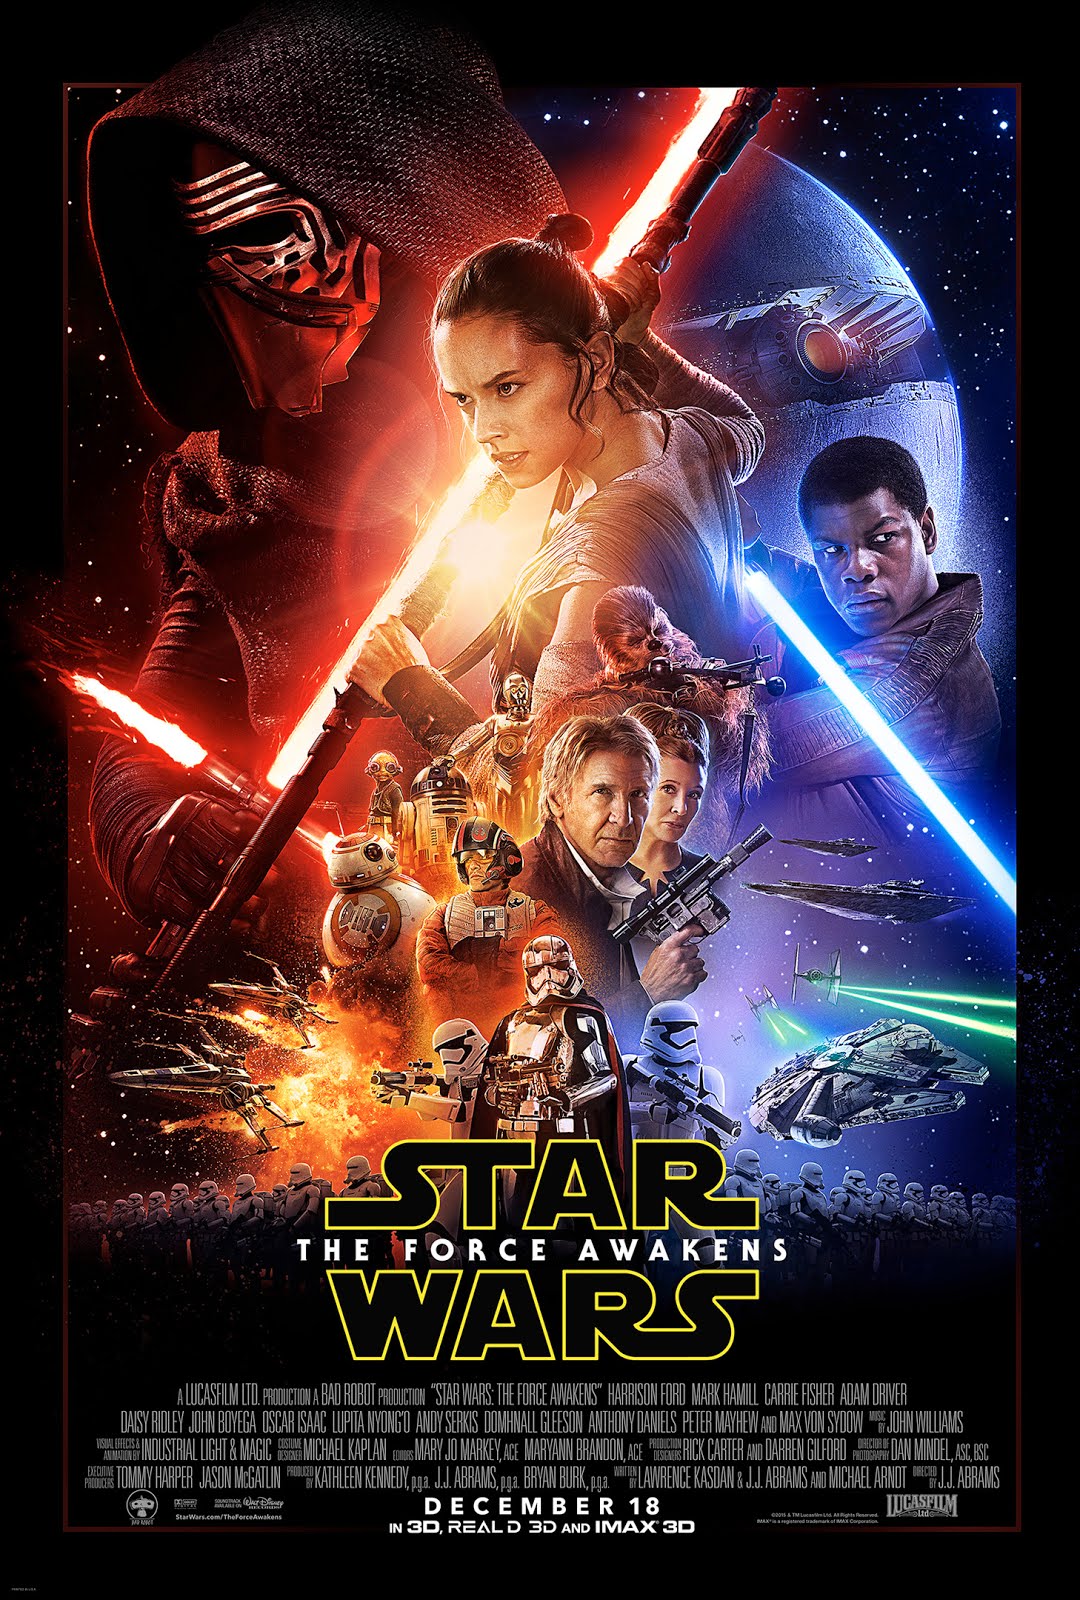 The Force Awakens cast and crew list on IMDB